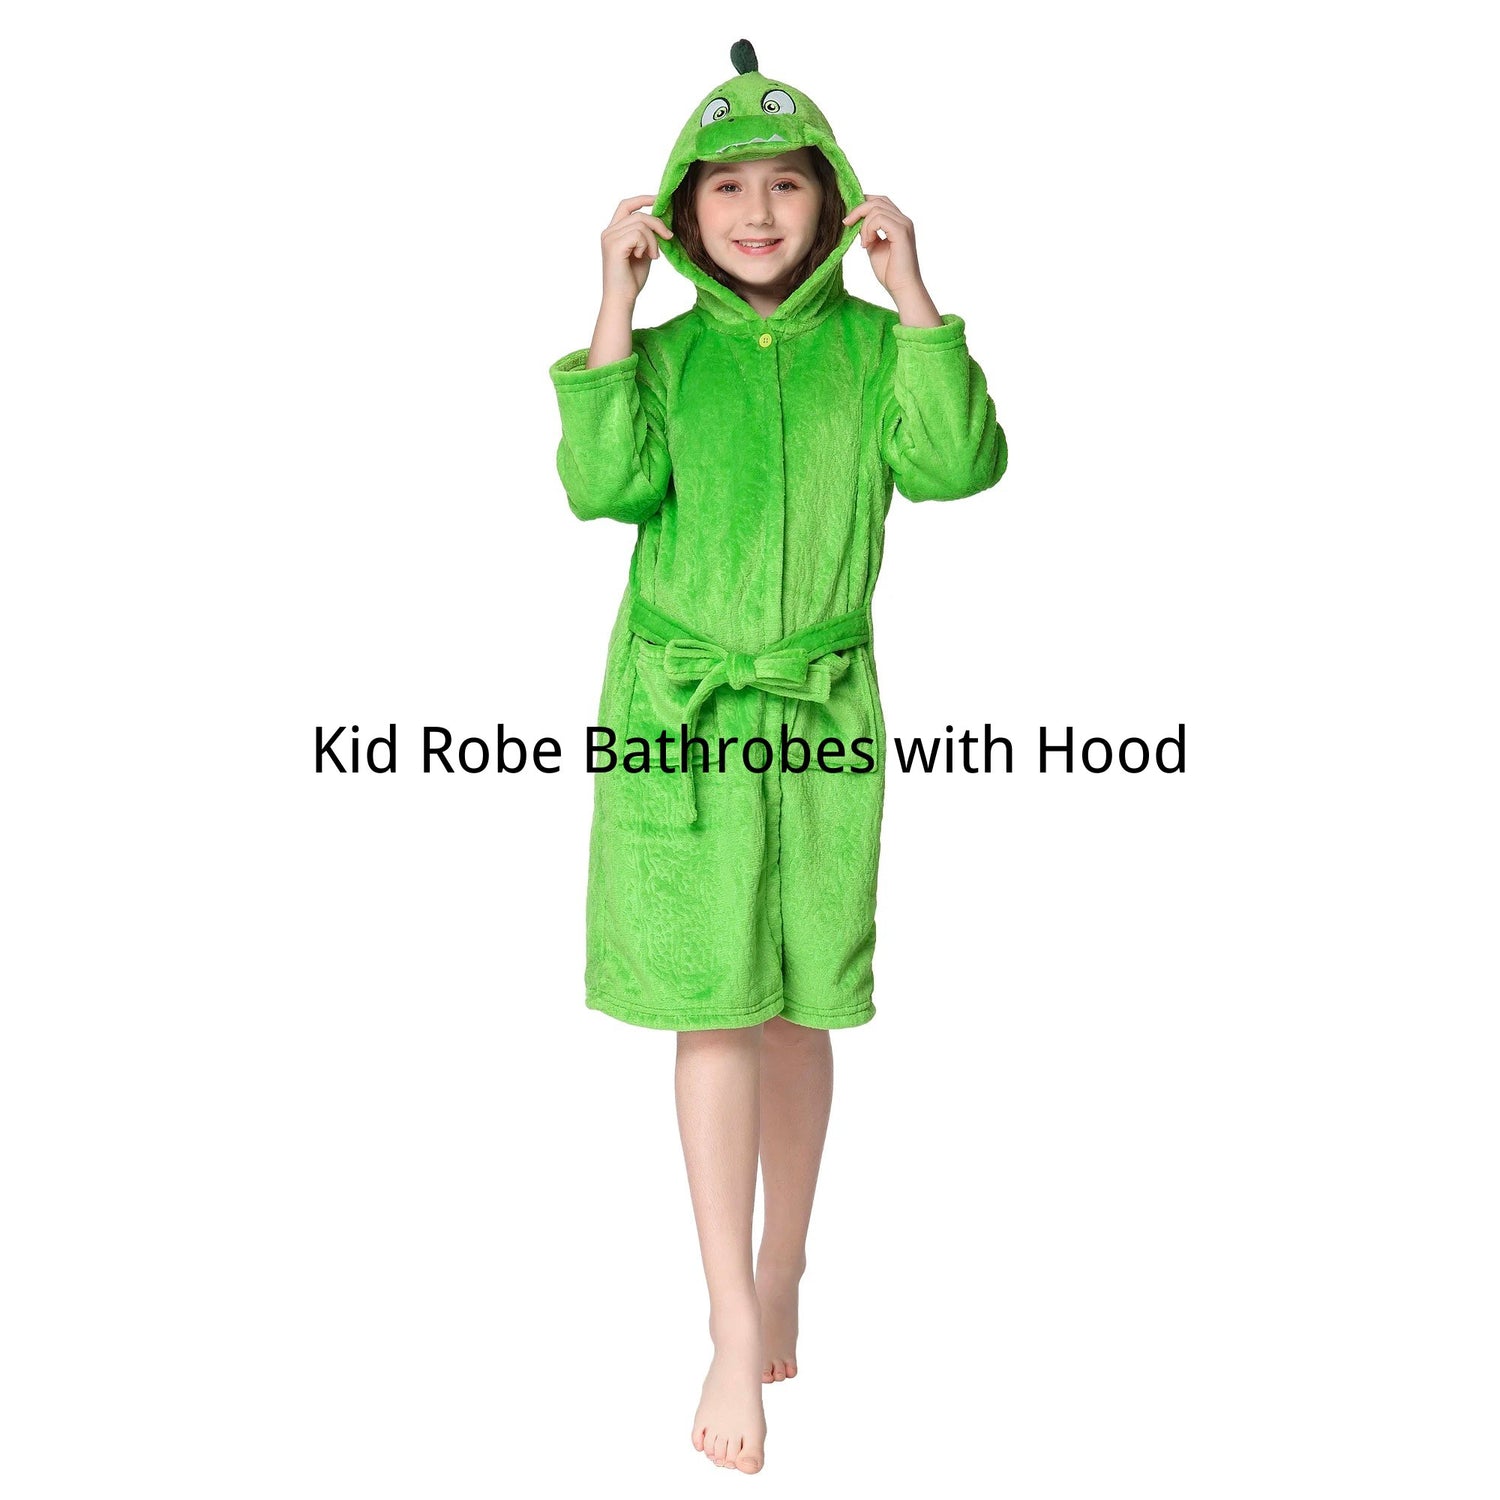 Kid Robe Bathrobes with Hood